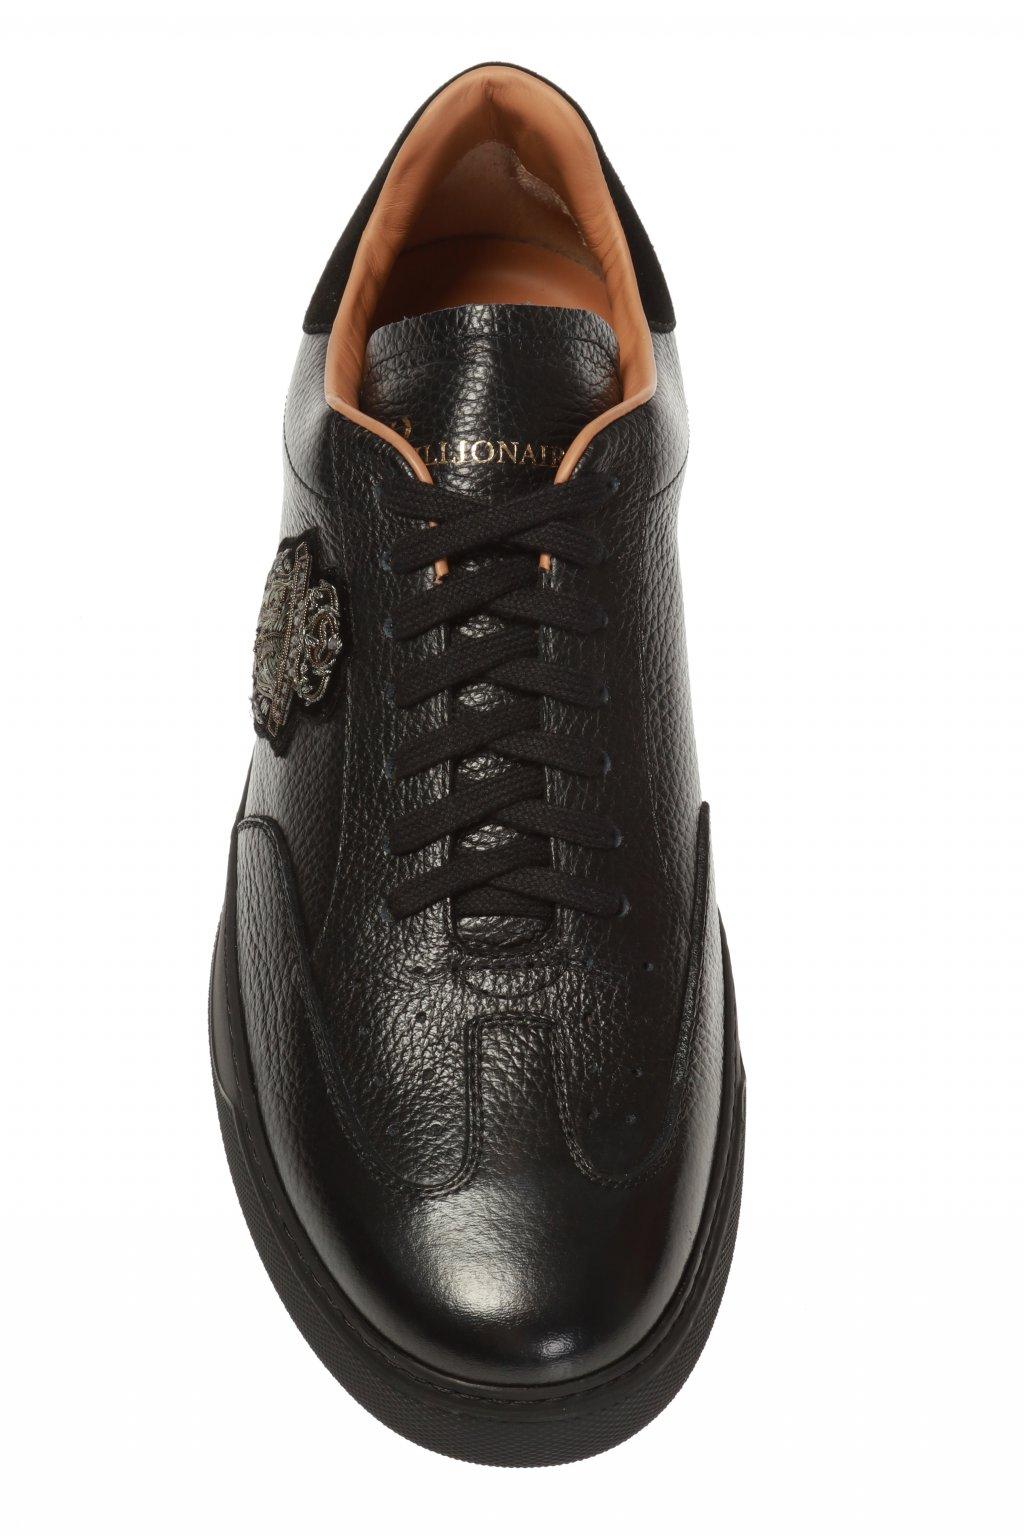 Billionaire Leather Appliqued Sneakers in Black for Men - Lyst